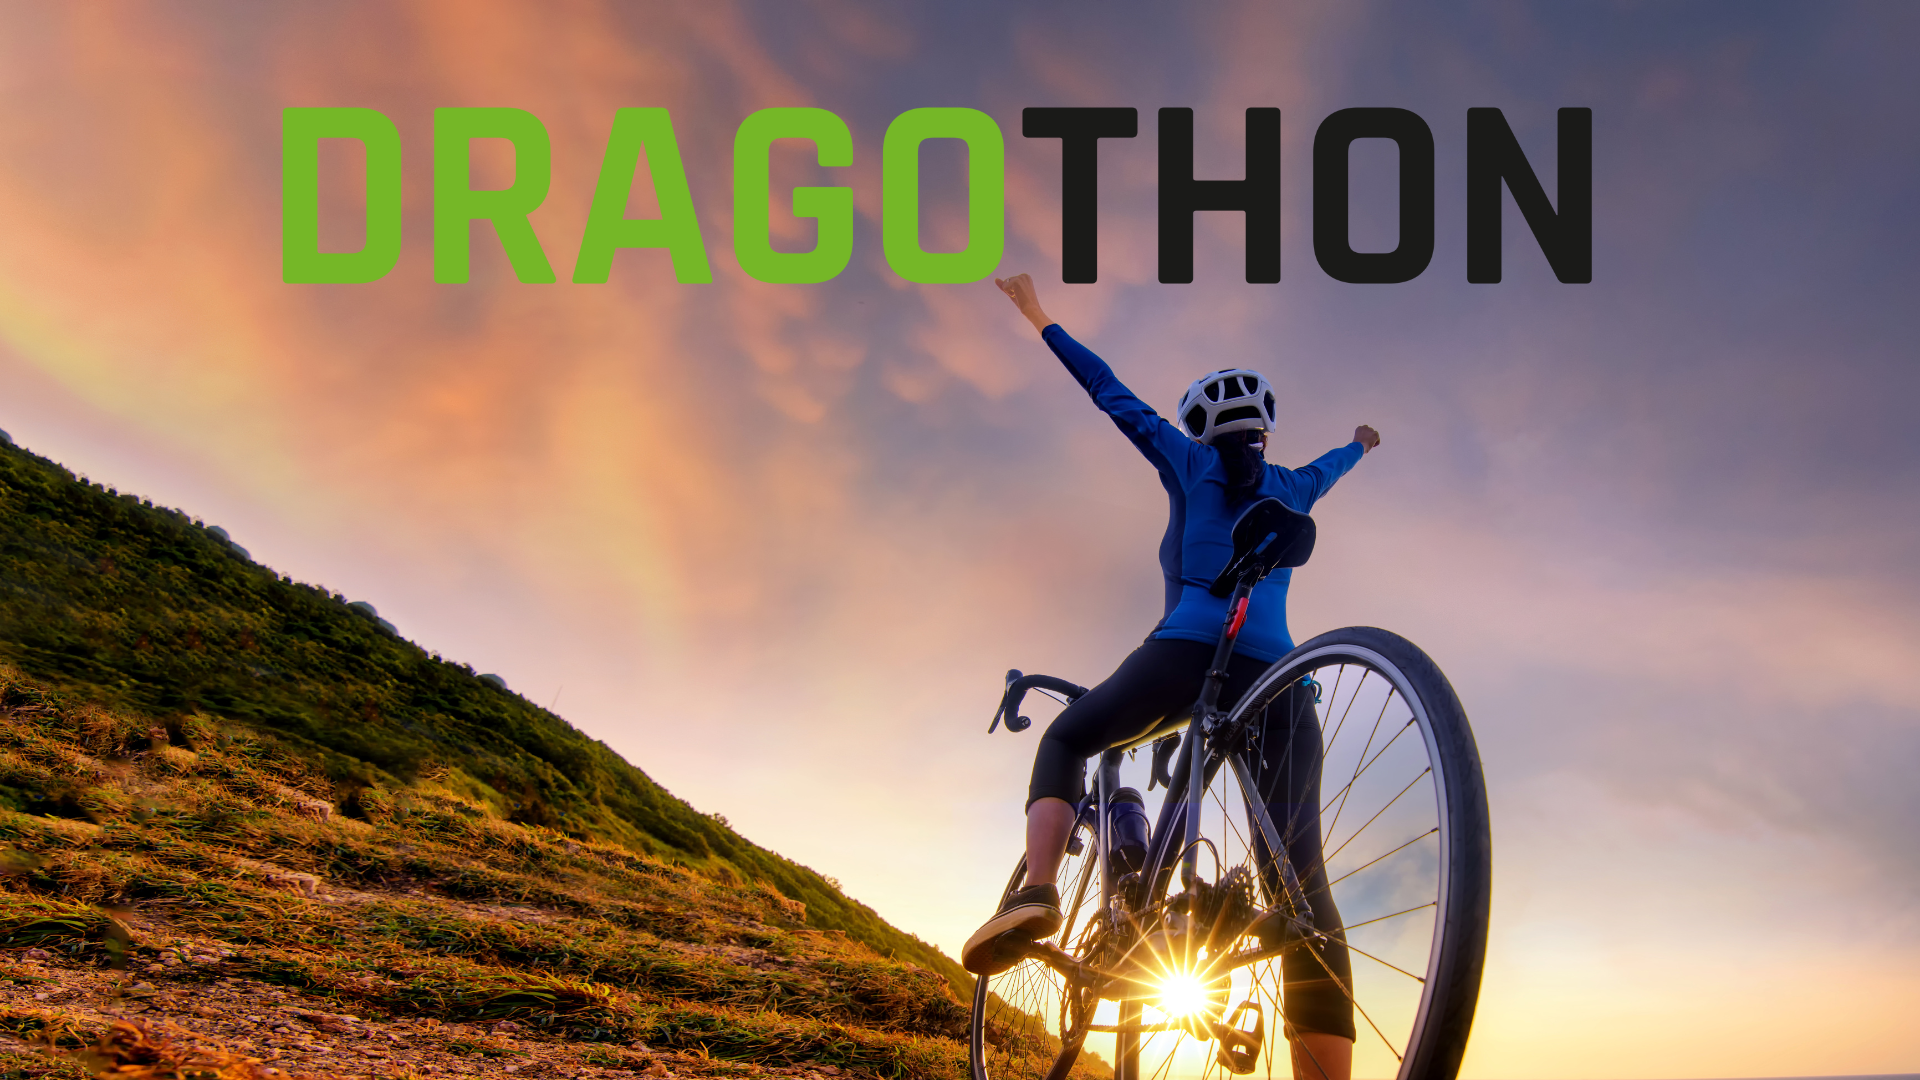 Dragothon – our charity initative